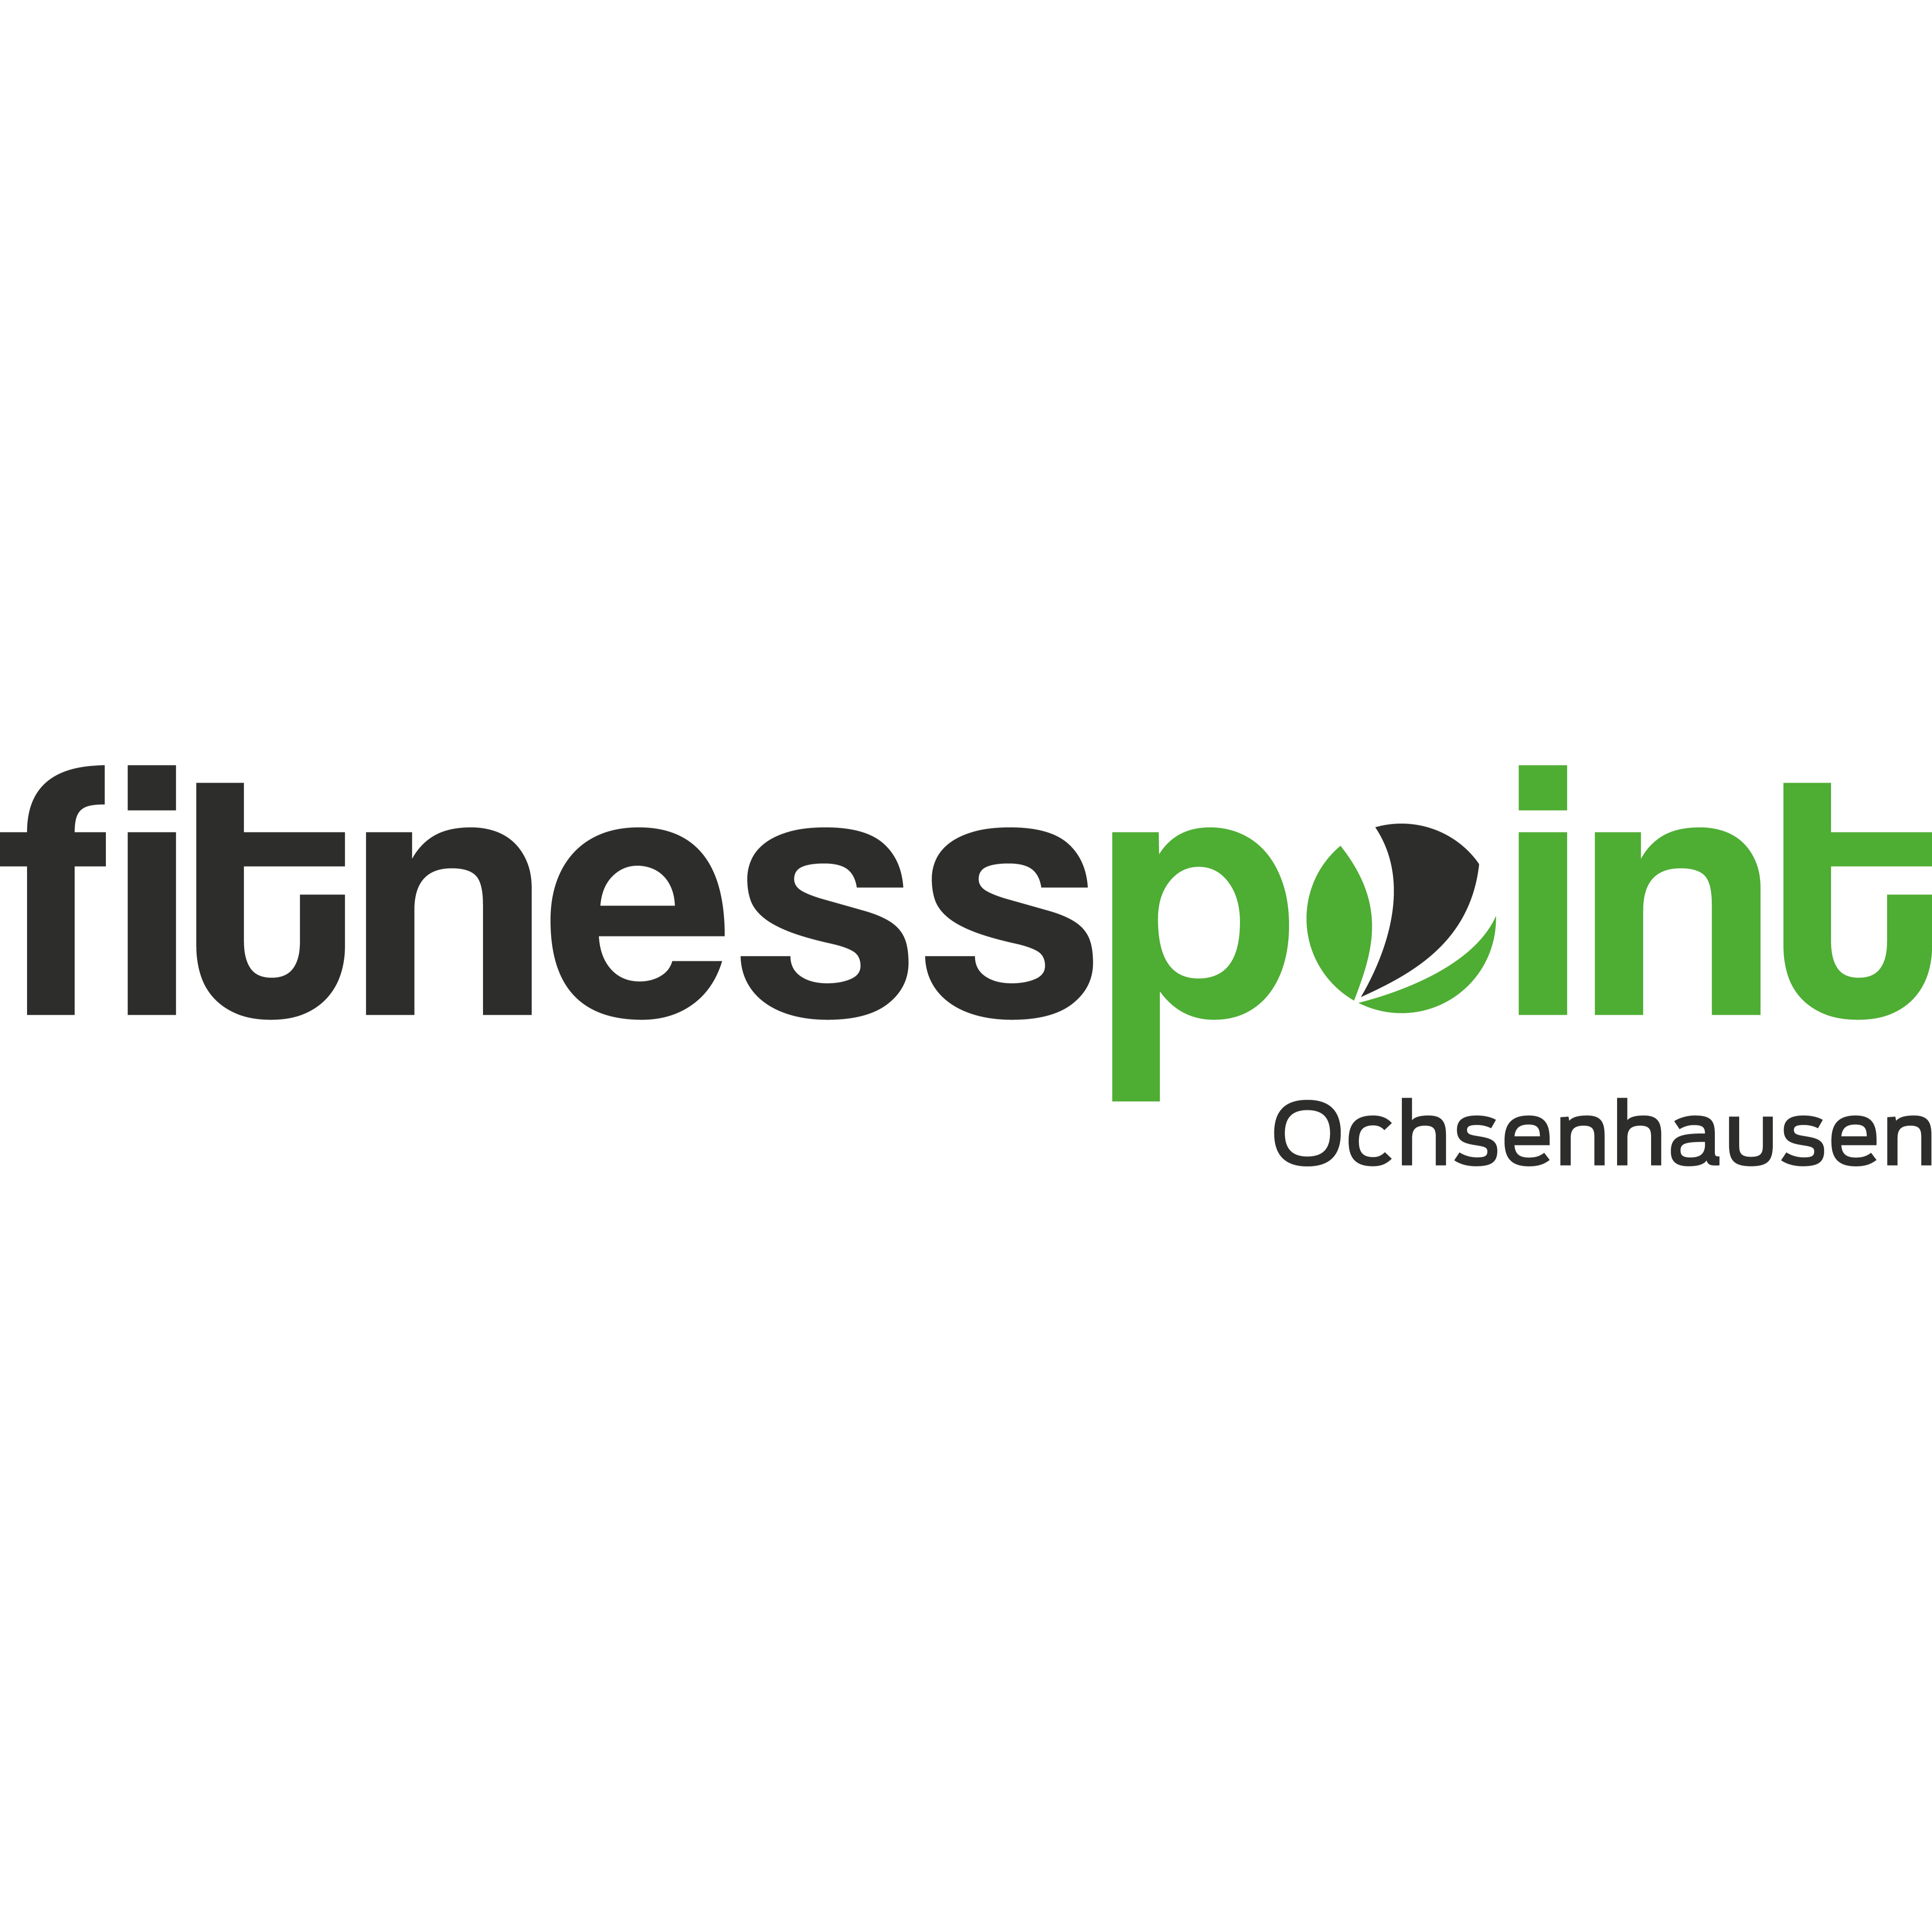 Fitnesspoint Ochsenhausen in Ochsenhausen - Logo